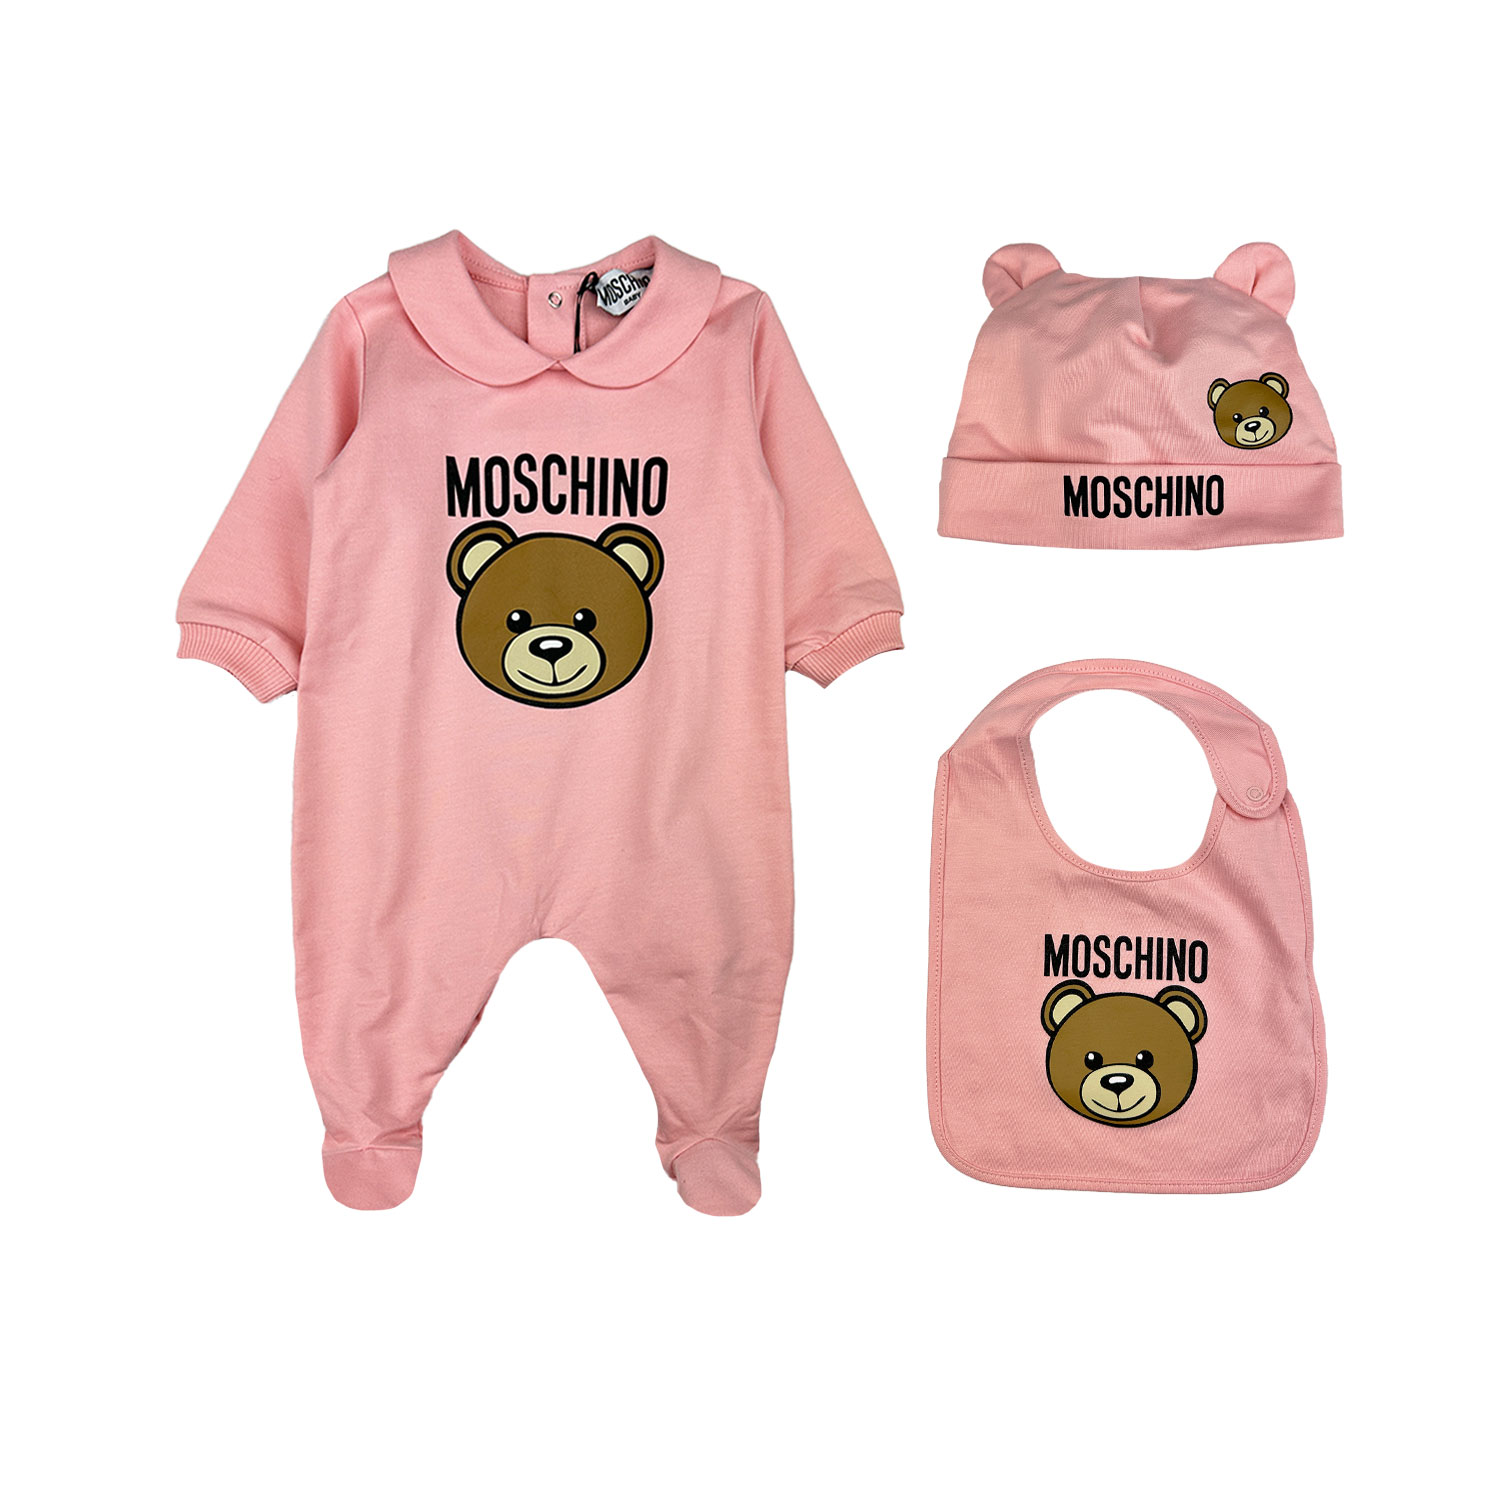 moschino-baby-set-roze